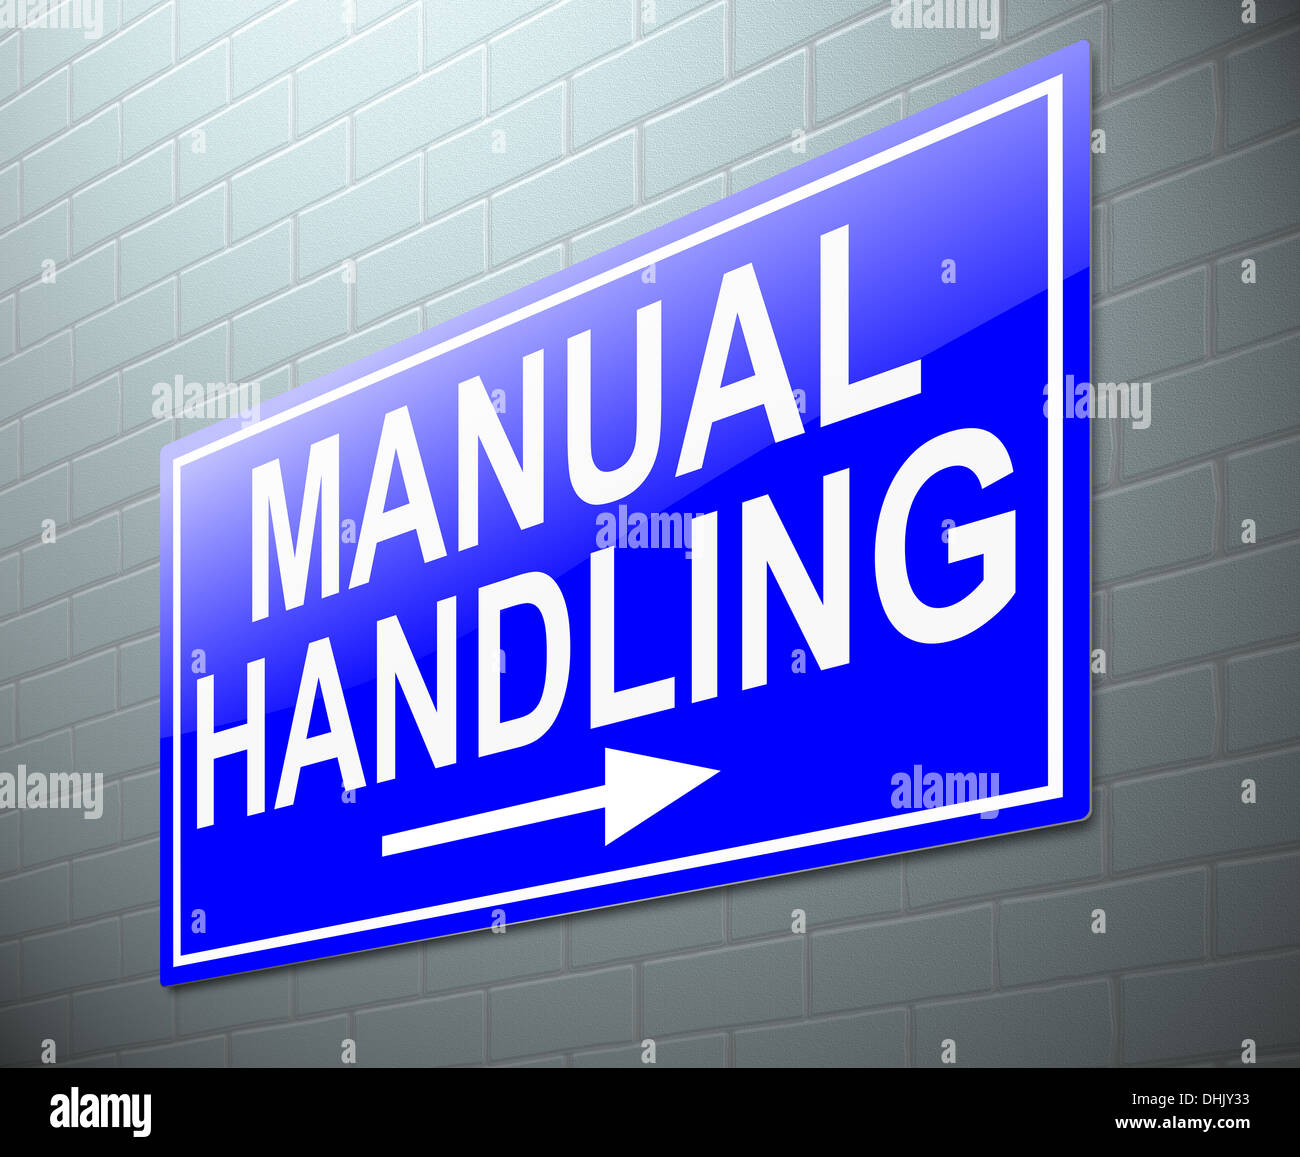 Manual handling concept. Stock Photo